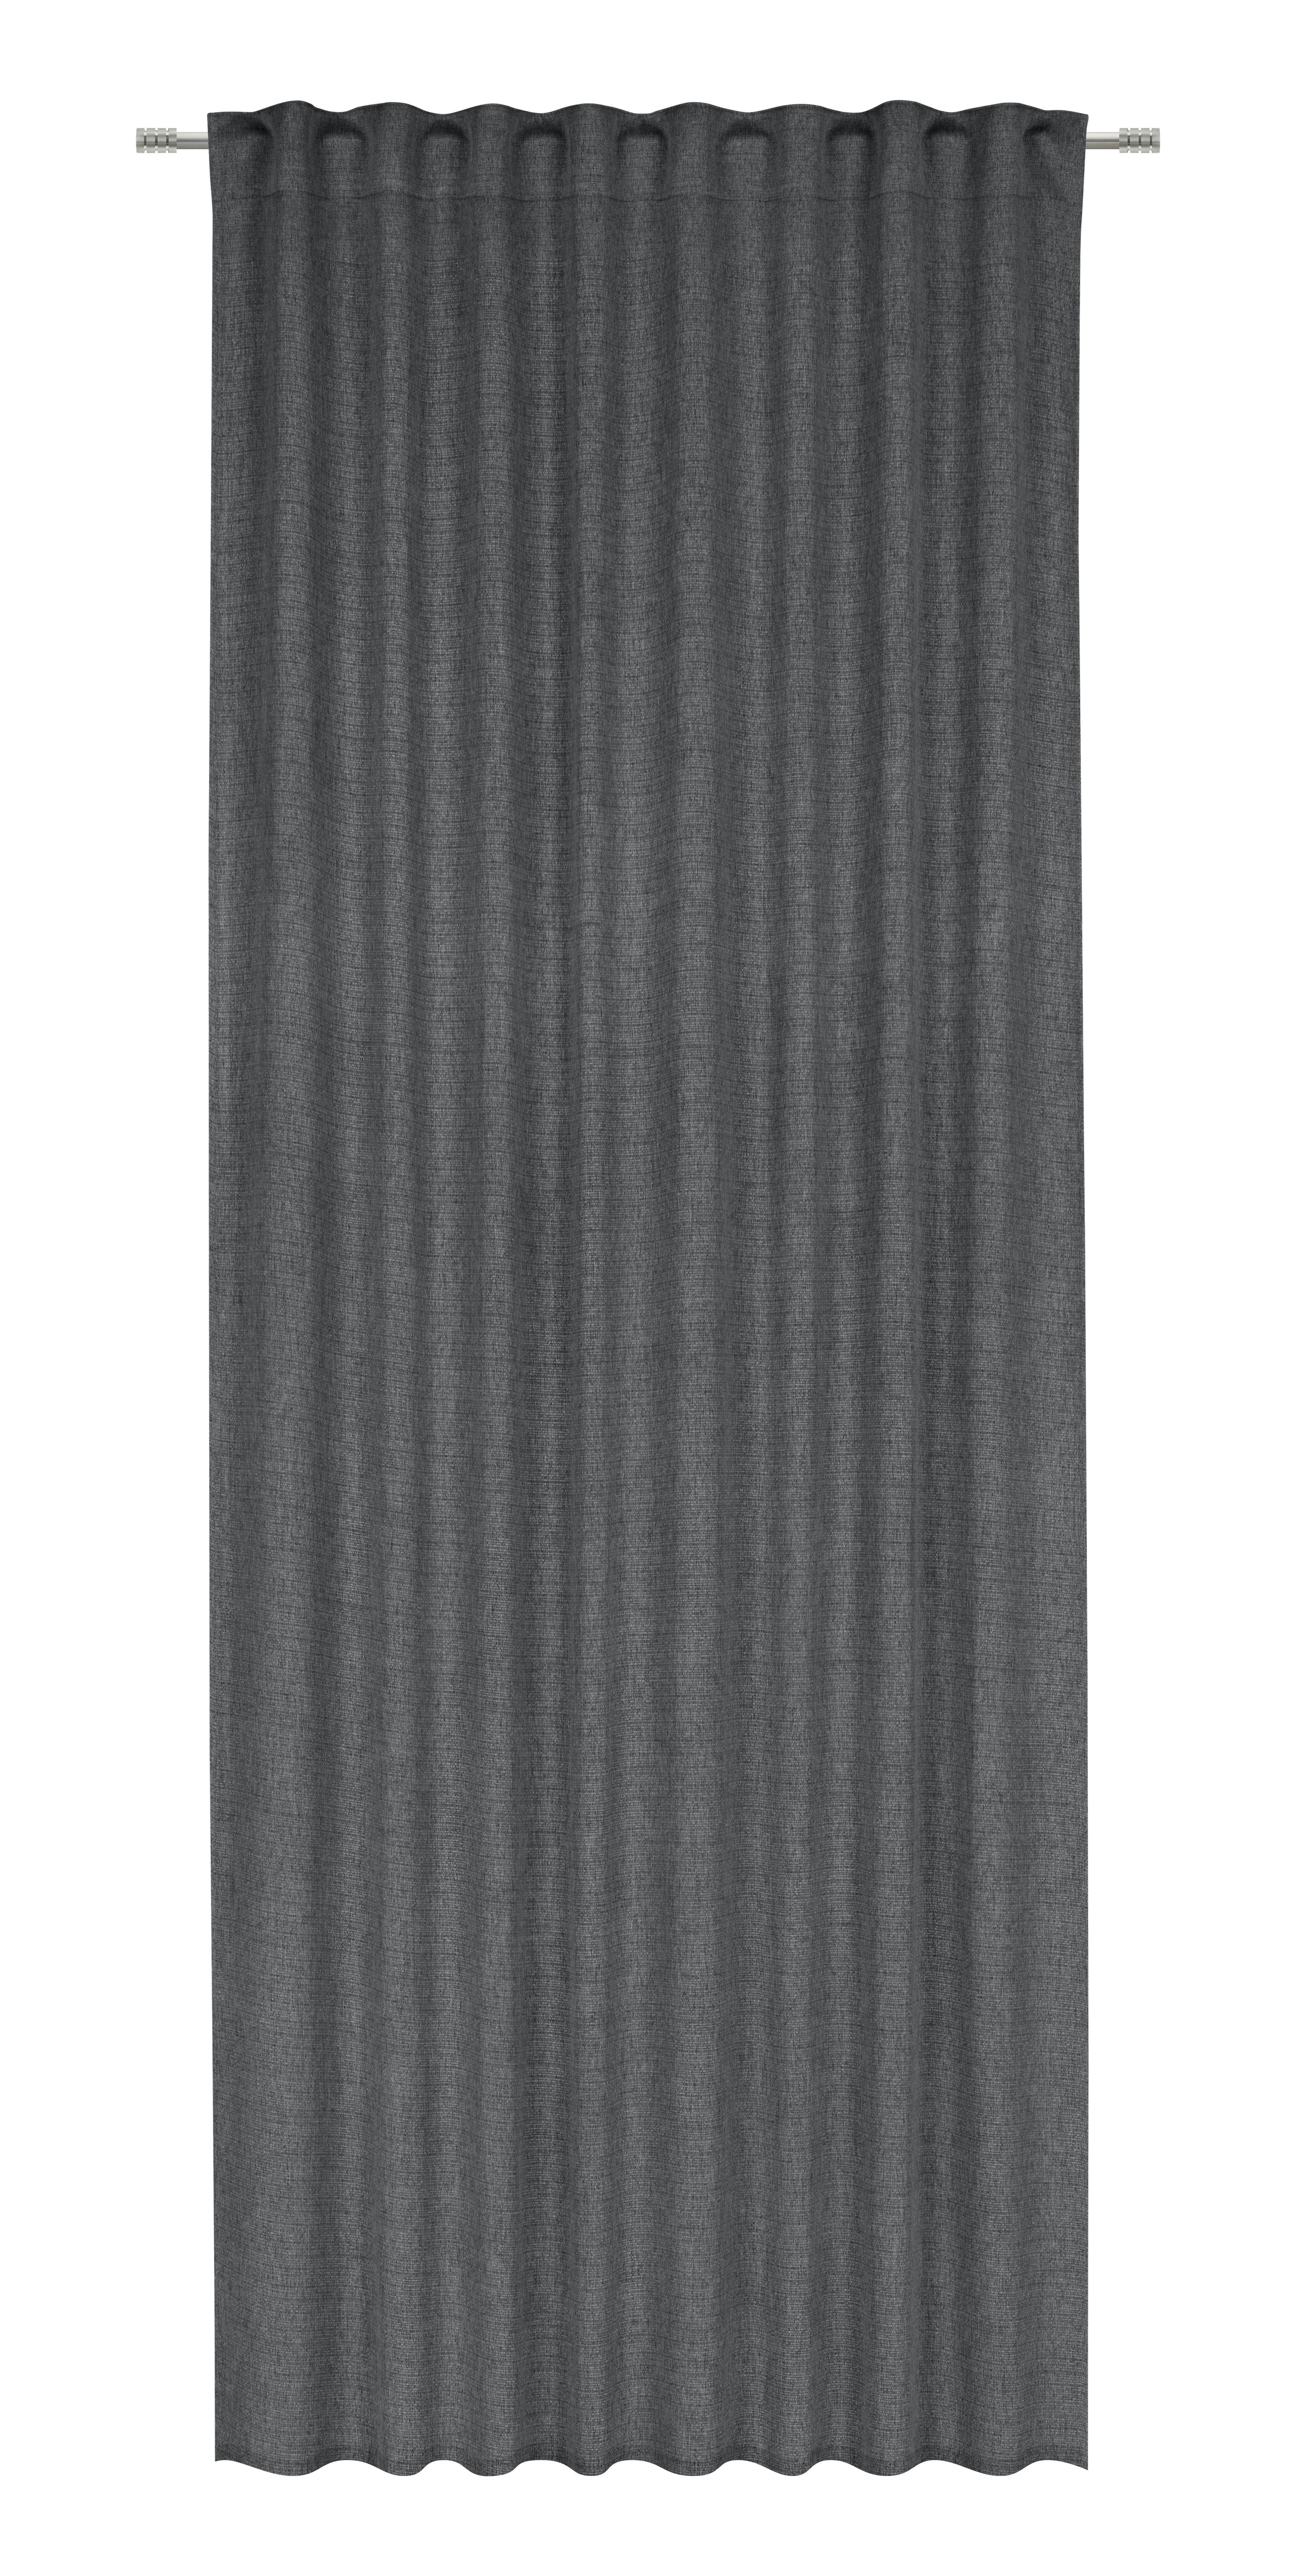 Verdunkelungsvorhang Anna - Anthrazit, ROMANTIK / LANDHAUS, Textil (135/245cm) - James Wood